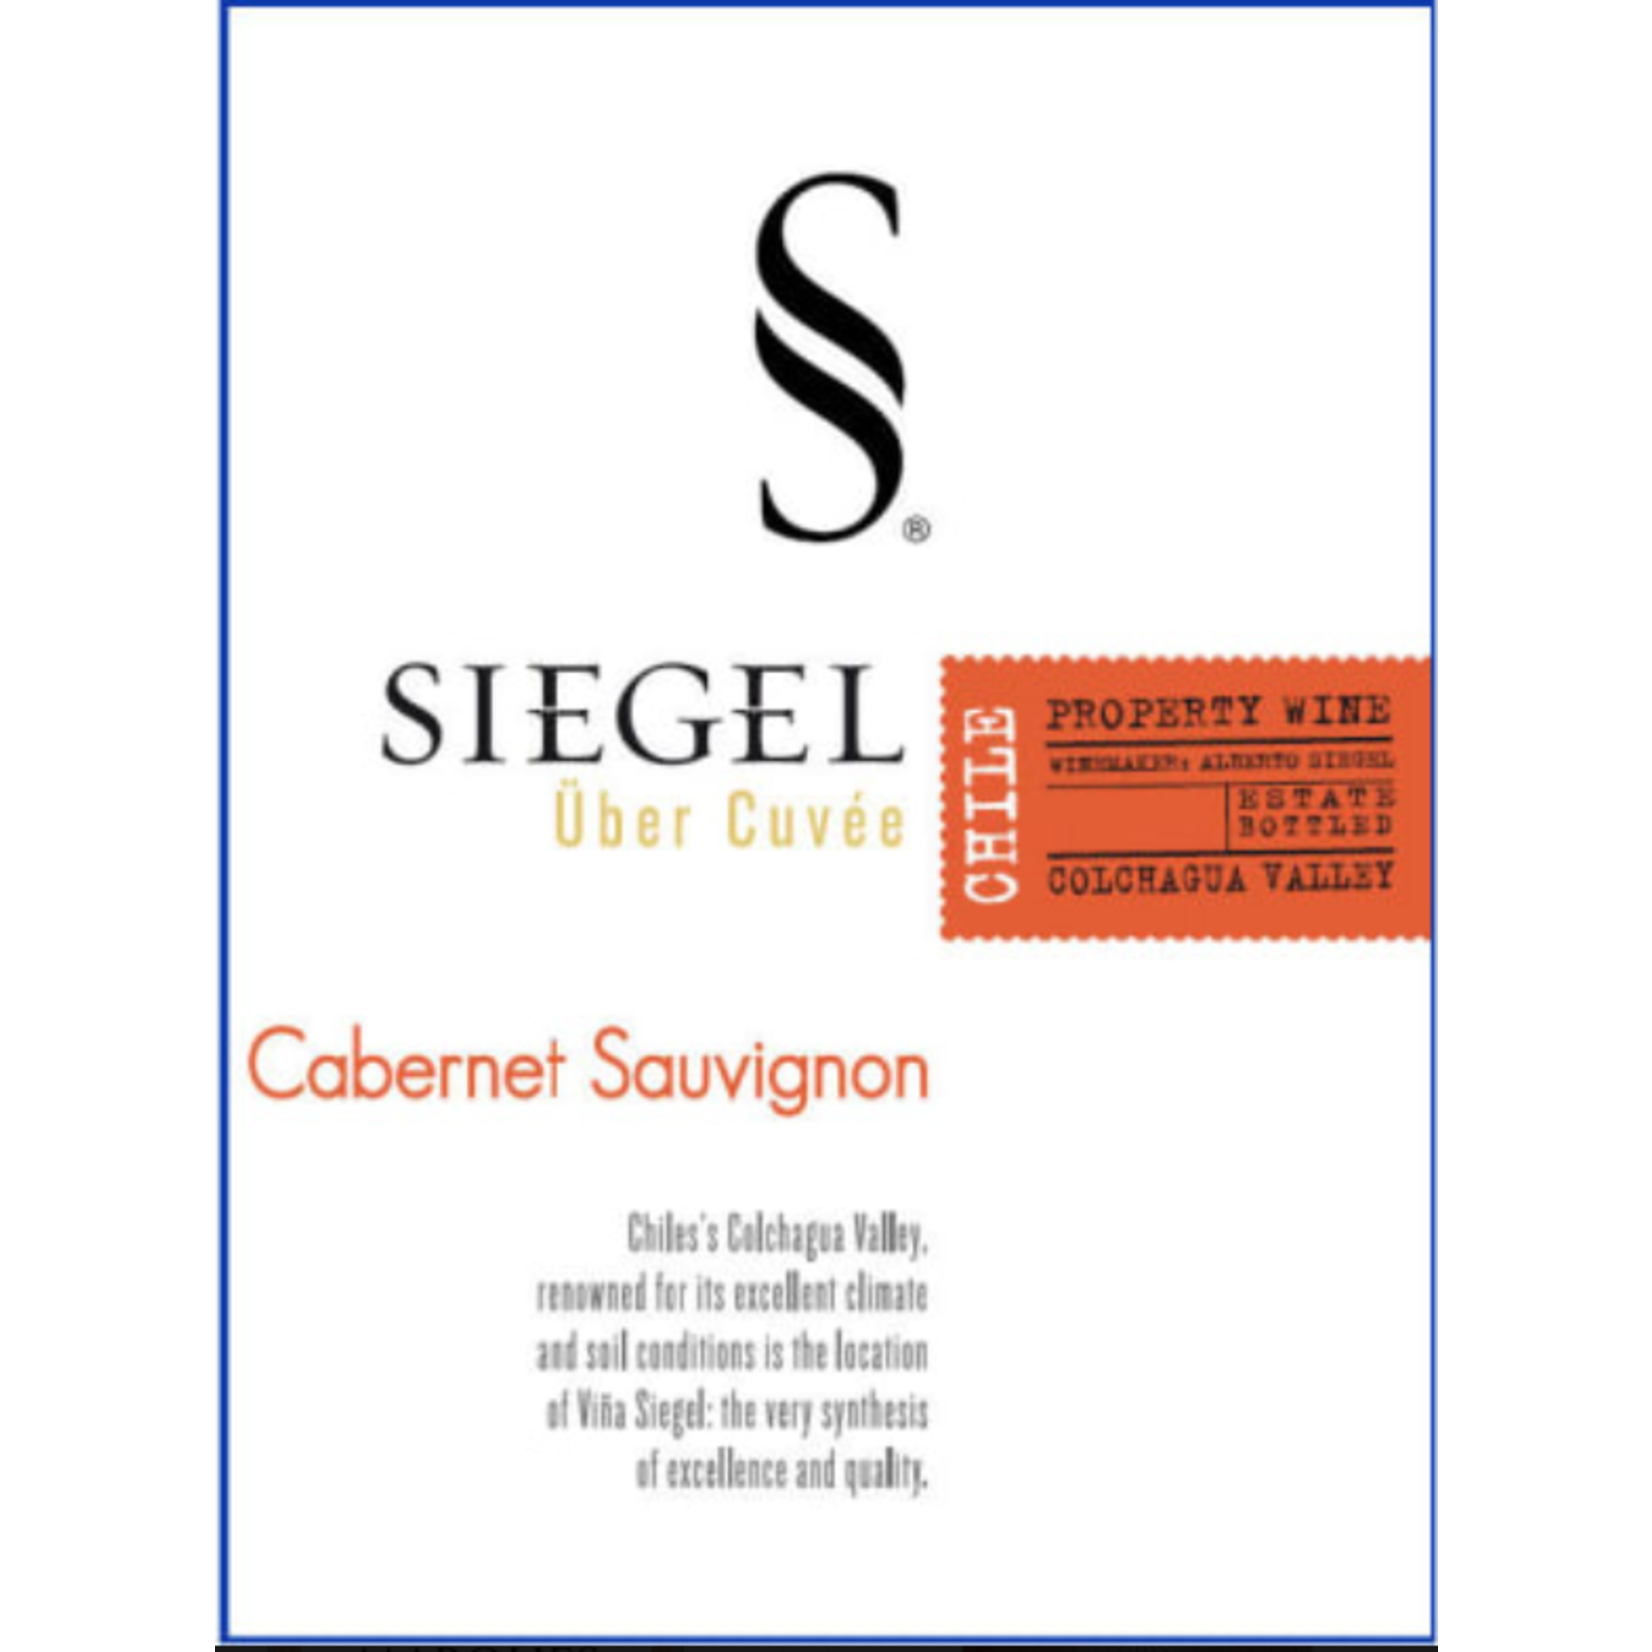 Siegel Wines Siegel Reserve Cabernet Sauvignon Reserve 2019 Colchagua Valley, Chile